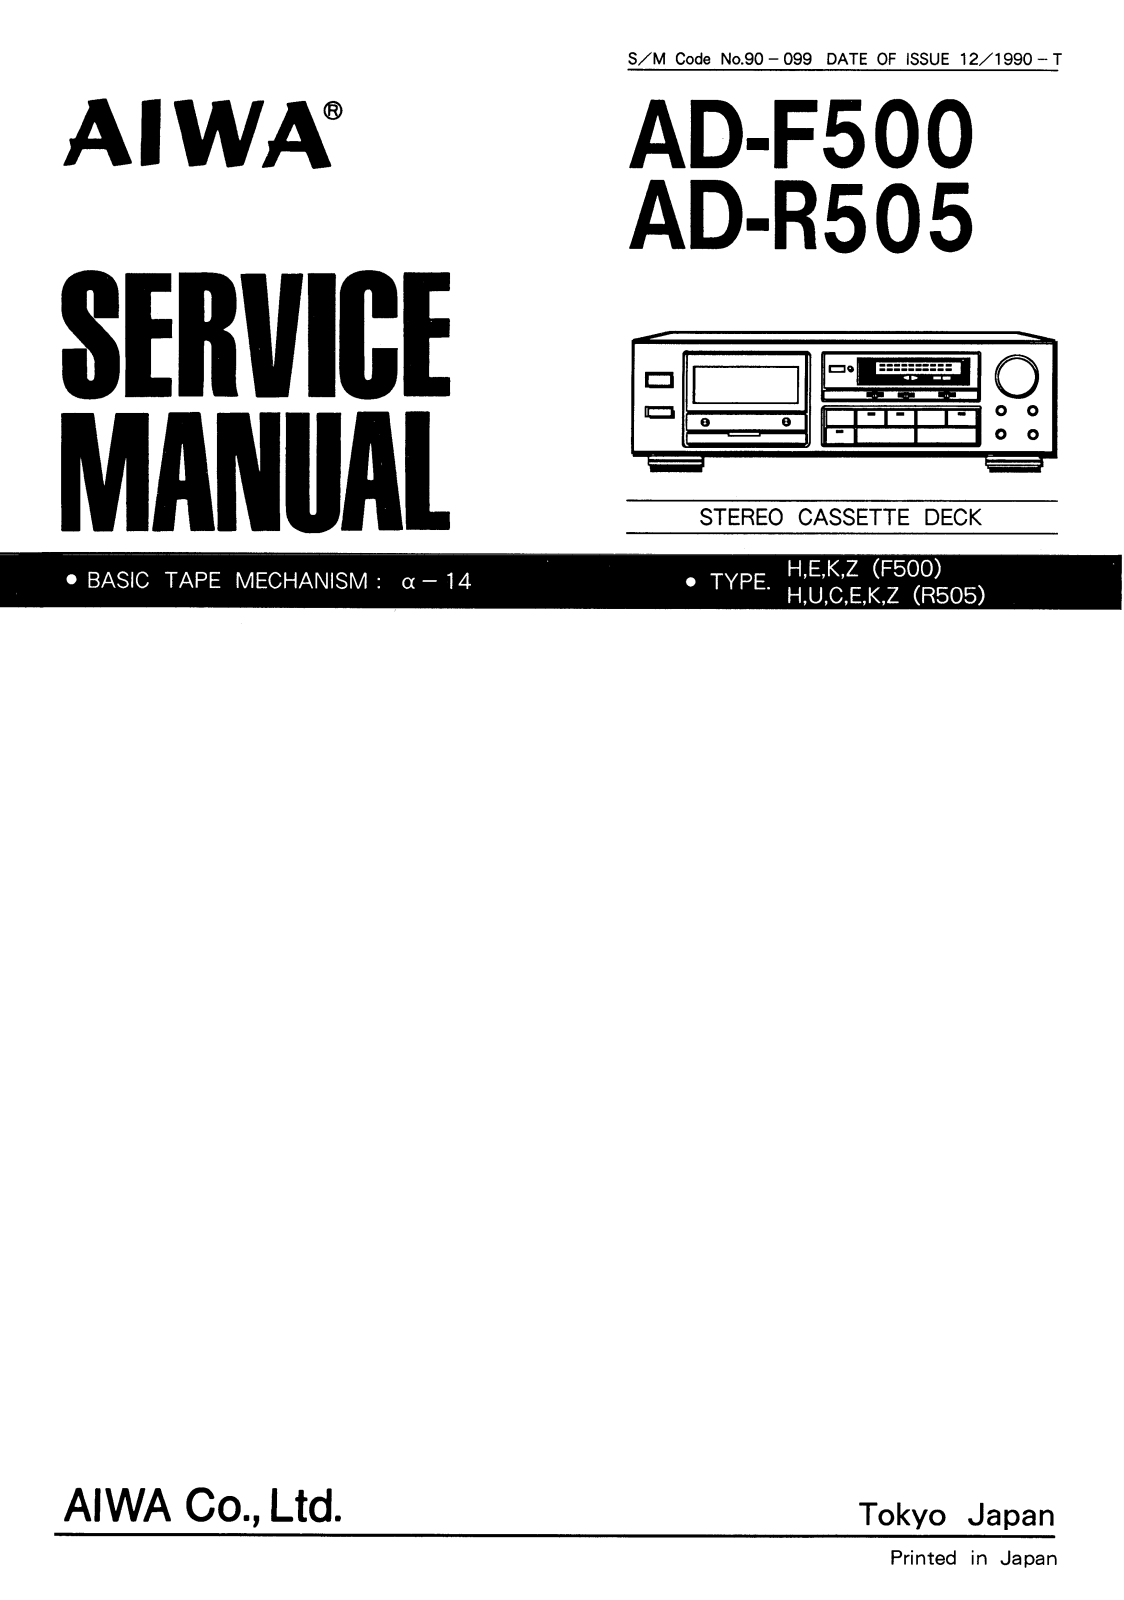 Aiwa ad-f500, ad-r505 Service Manual